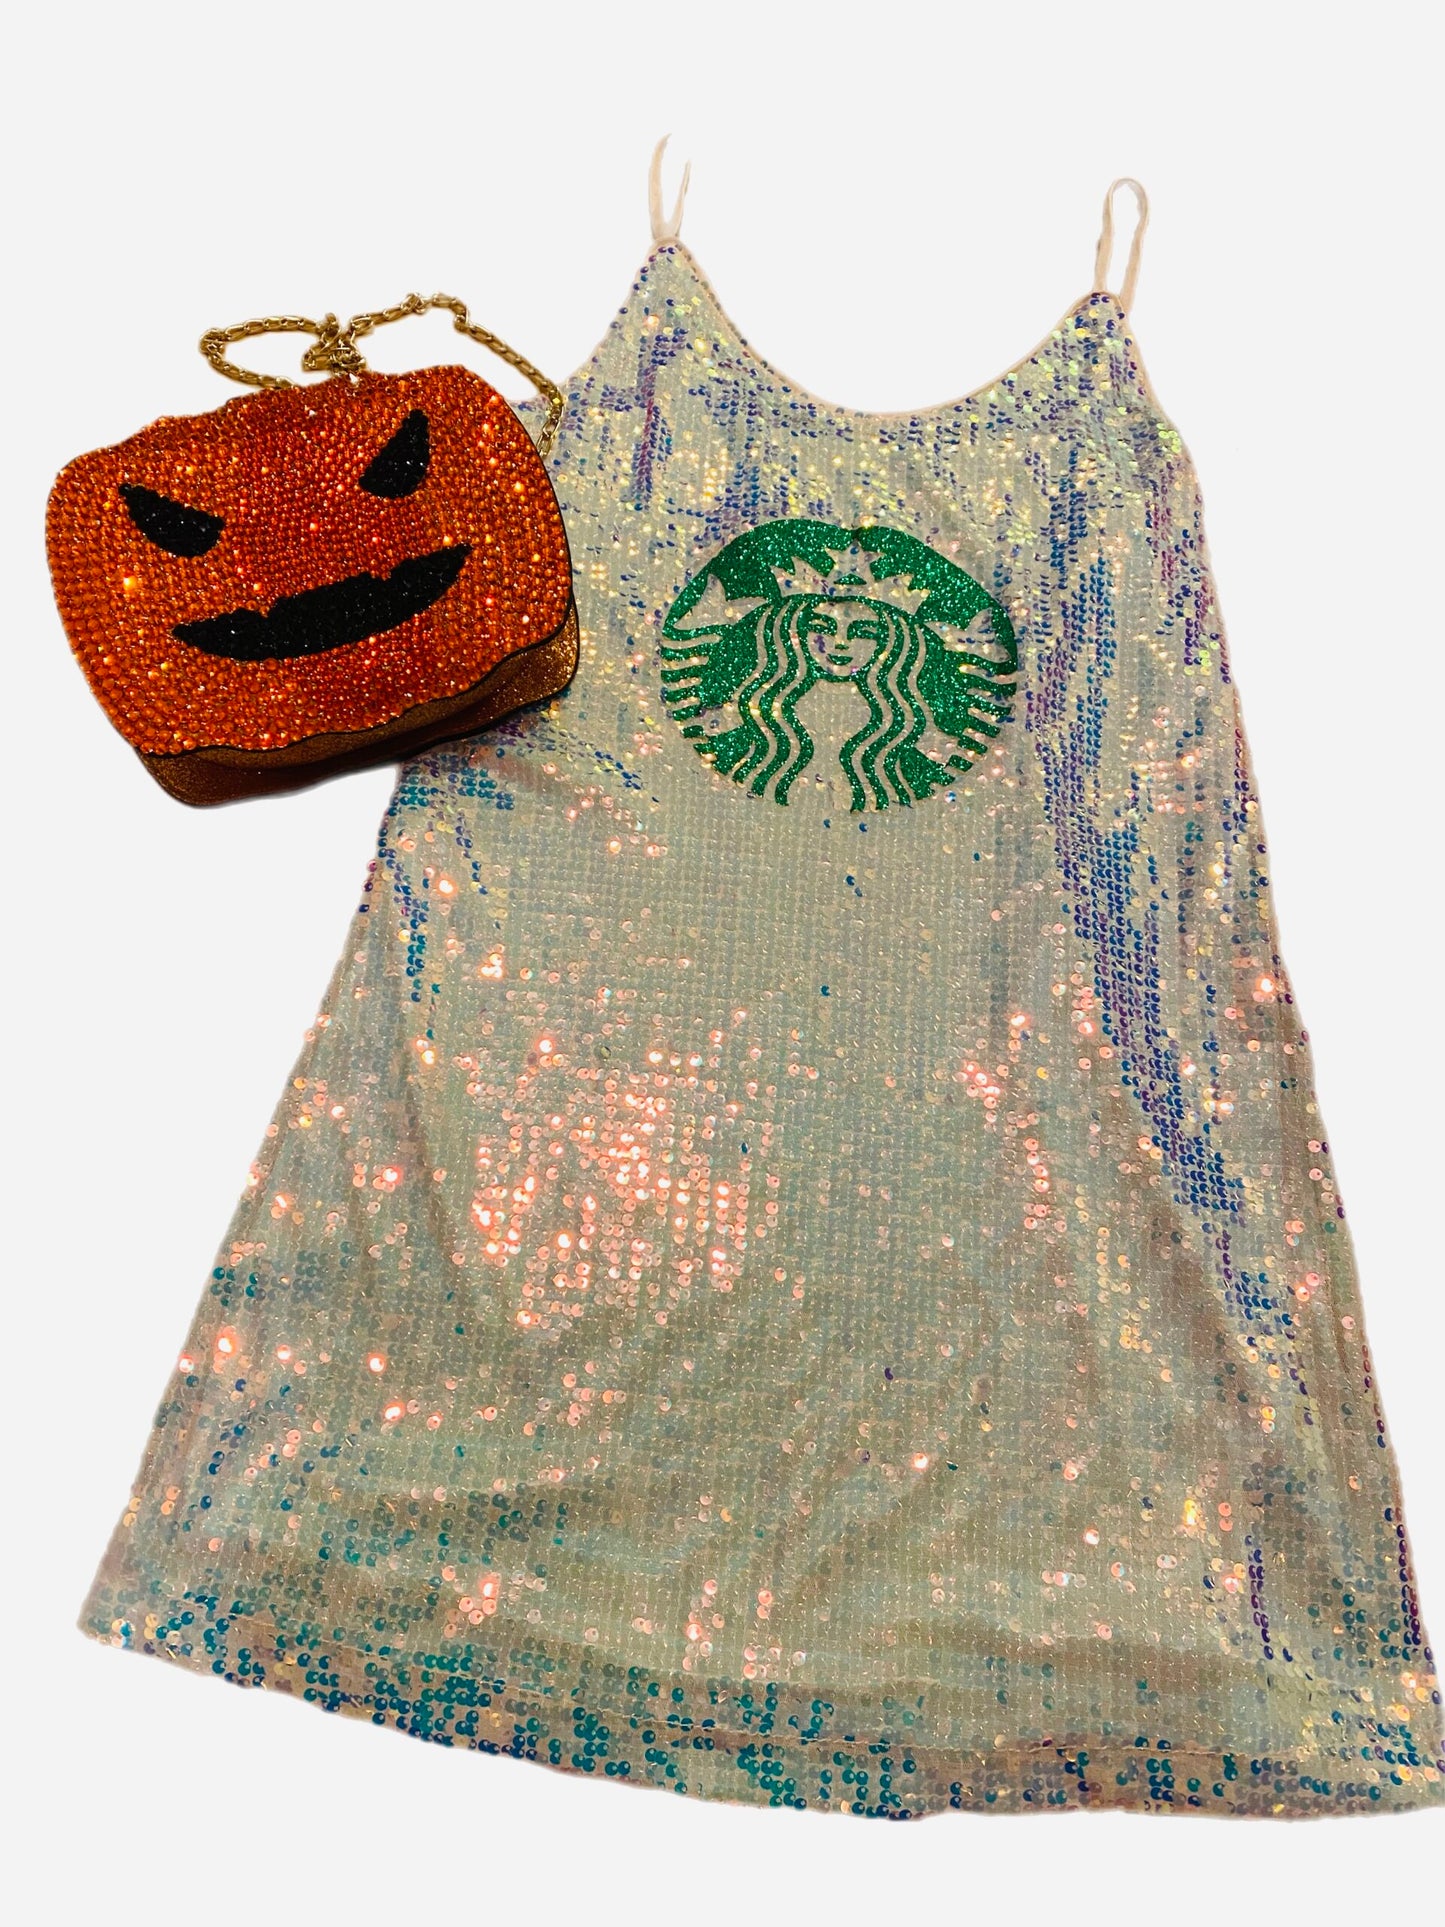 Starbucks Sequin Dress